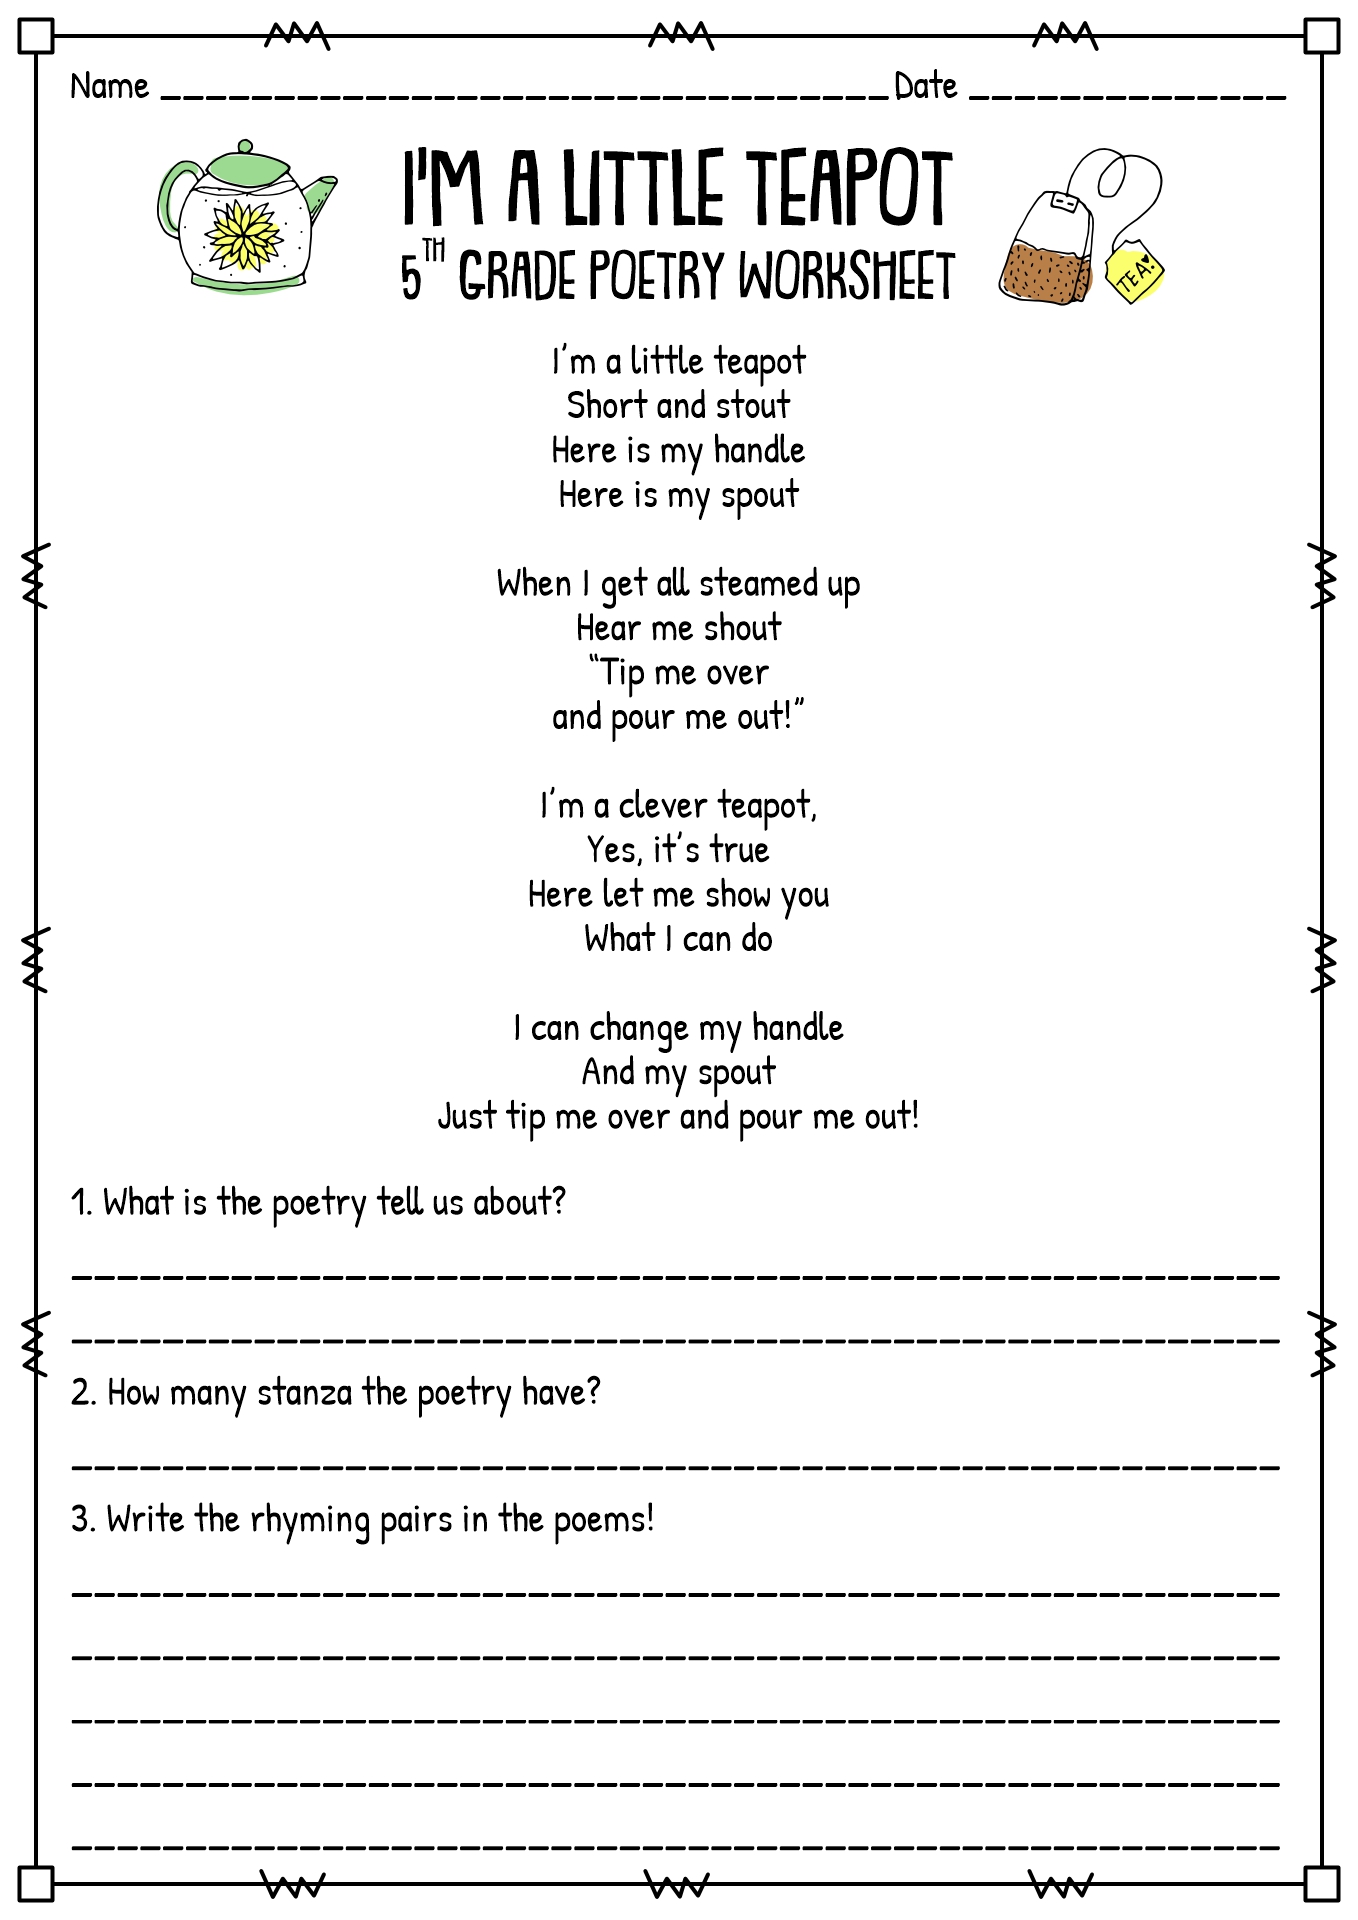 5th Grade Poetry Worksheets